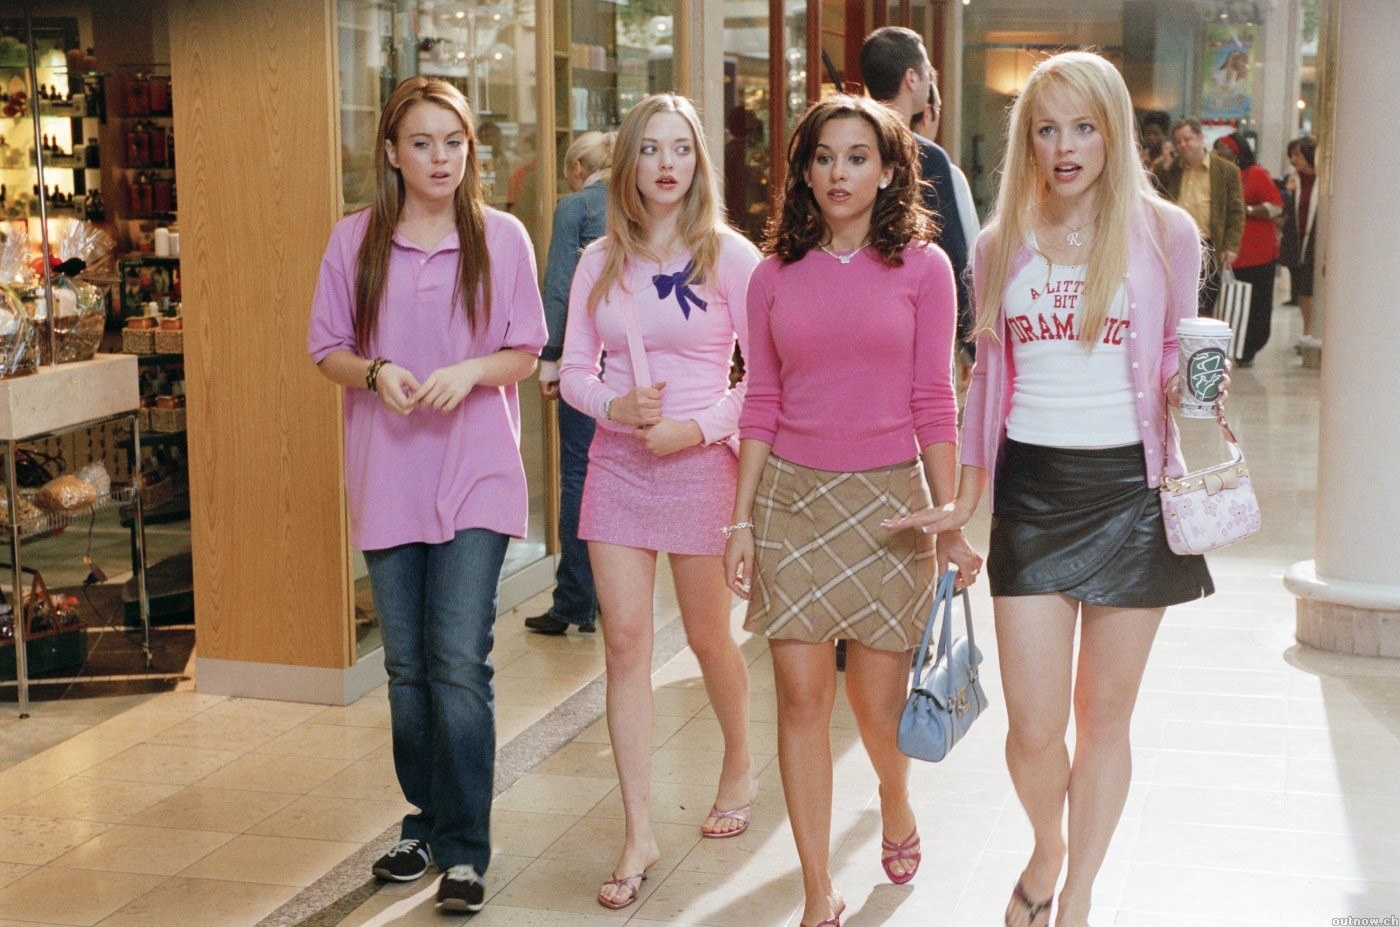 Lindsay Lohan, Amanda Seyfried, Lacey Chabert, and Rachel McAdams walk together through a mall